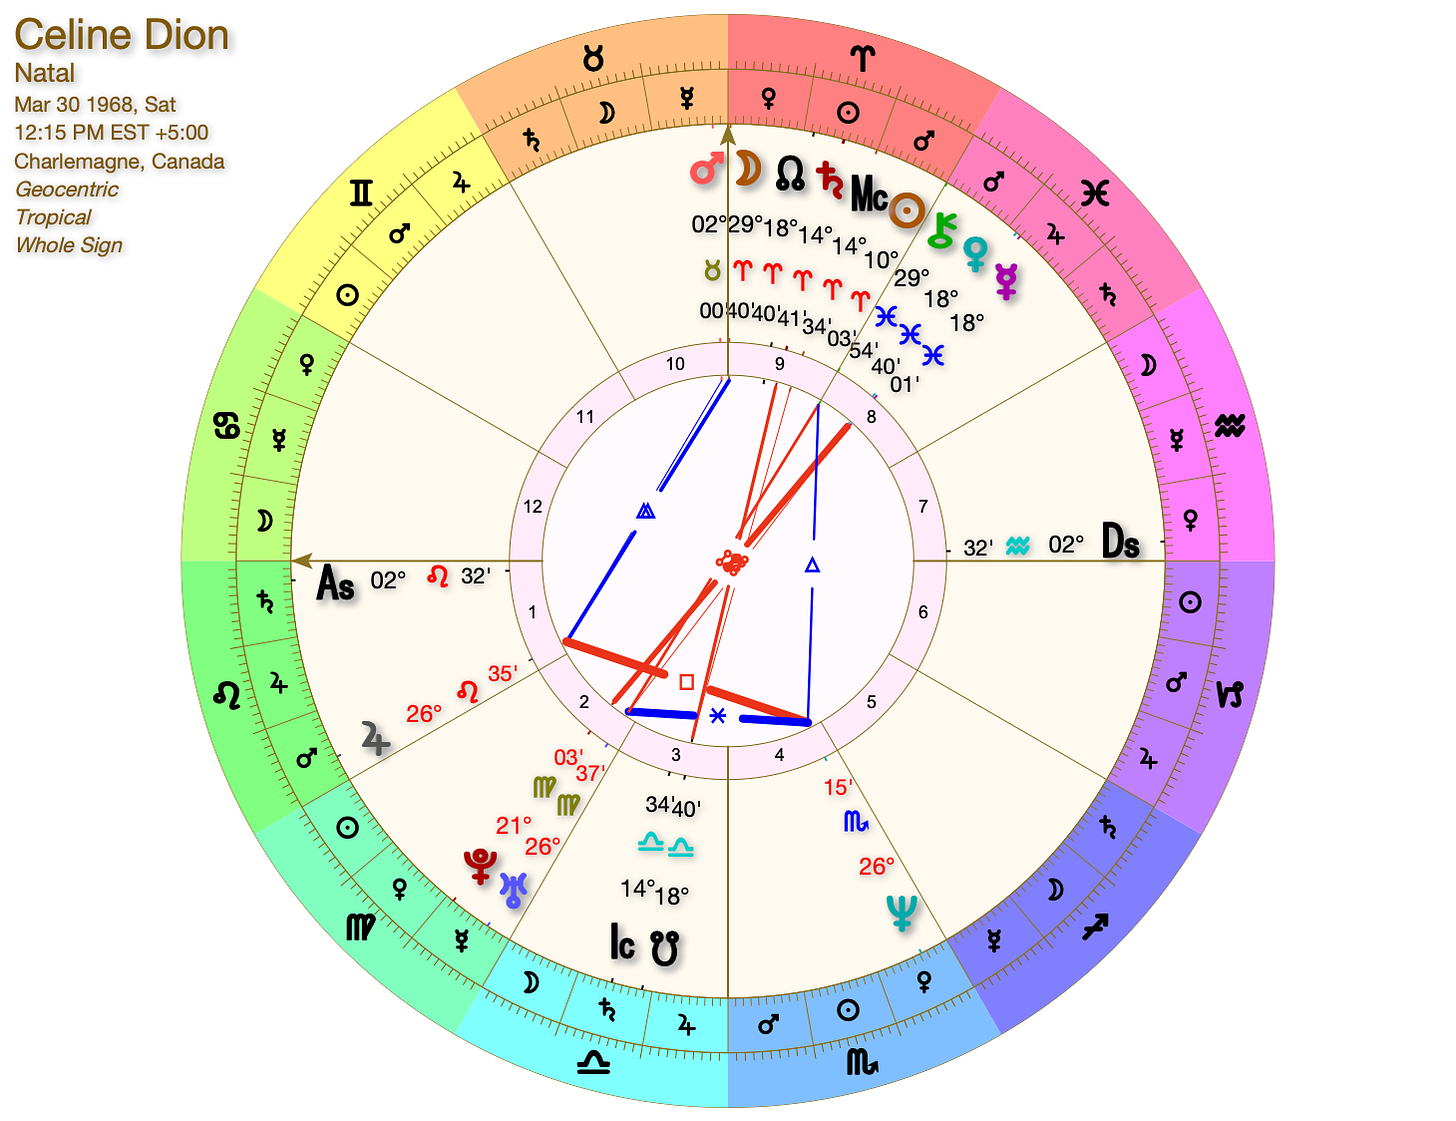 Image description: Celion Dion’s natal chart displayed using Whole Sign Houses